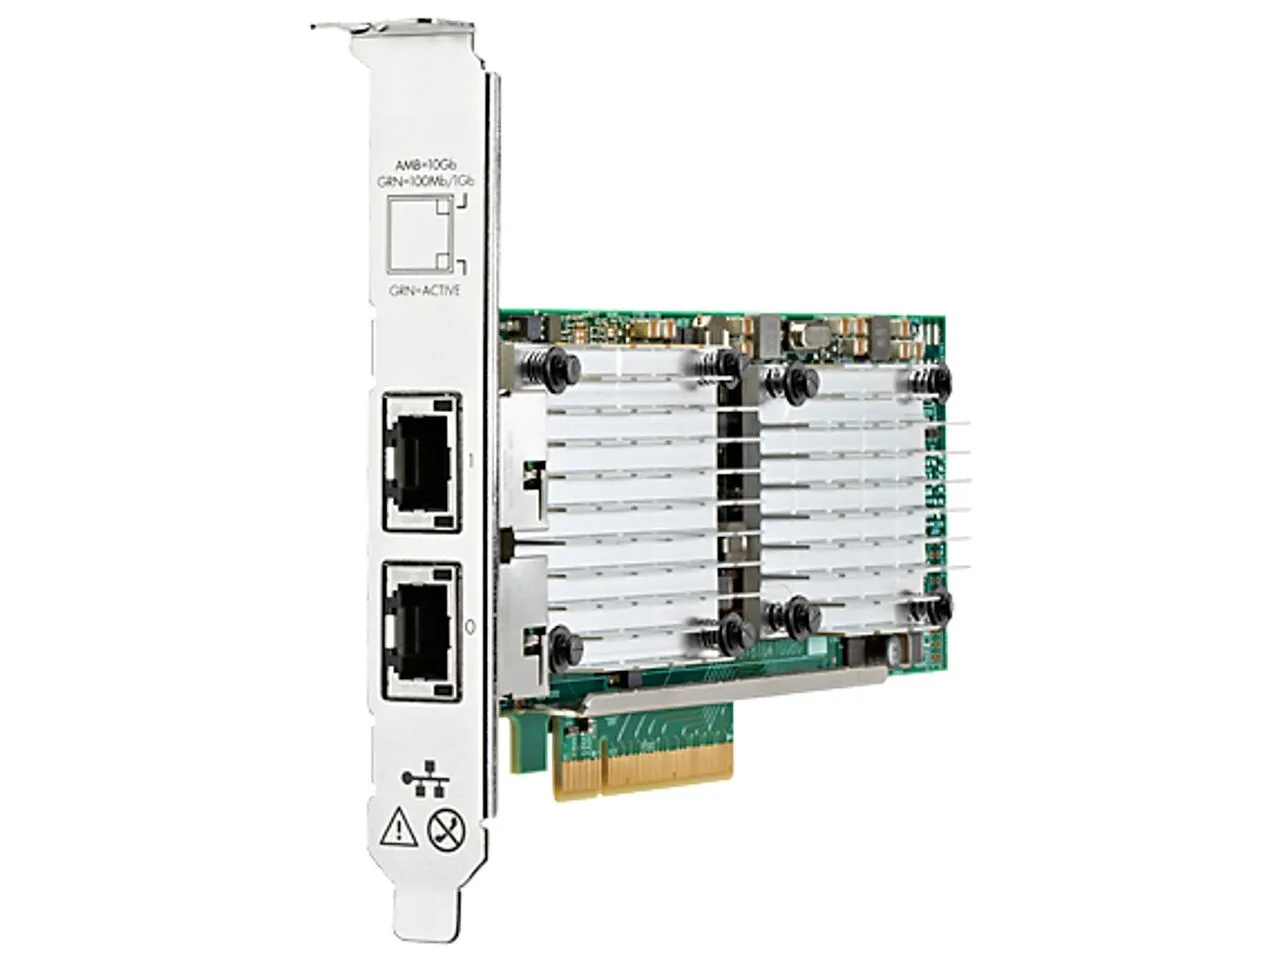   Network Adapter 657128-002 for HPE Proliant Gen8 Server 